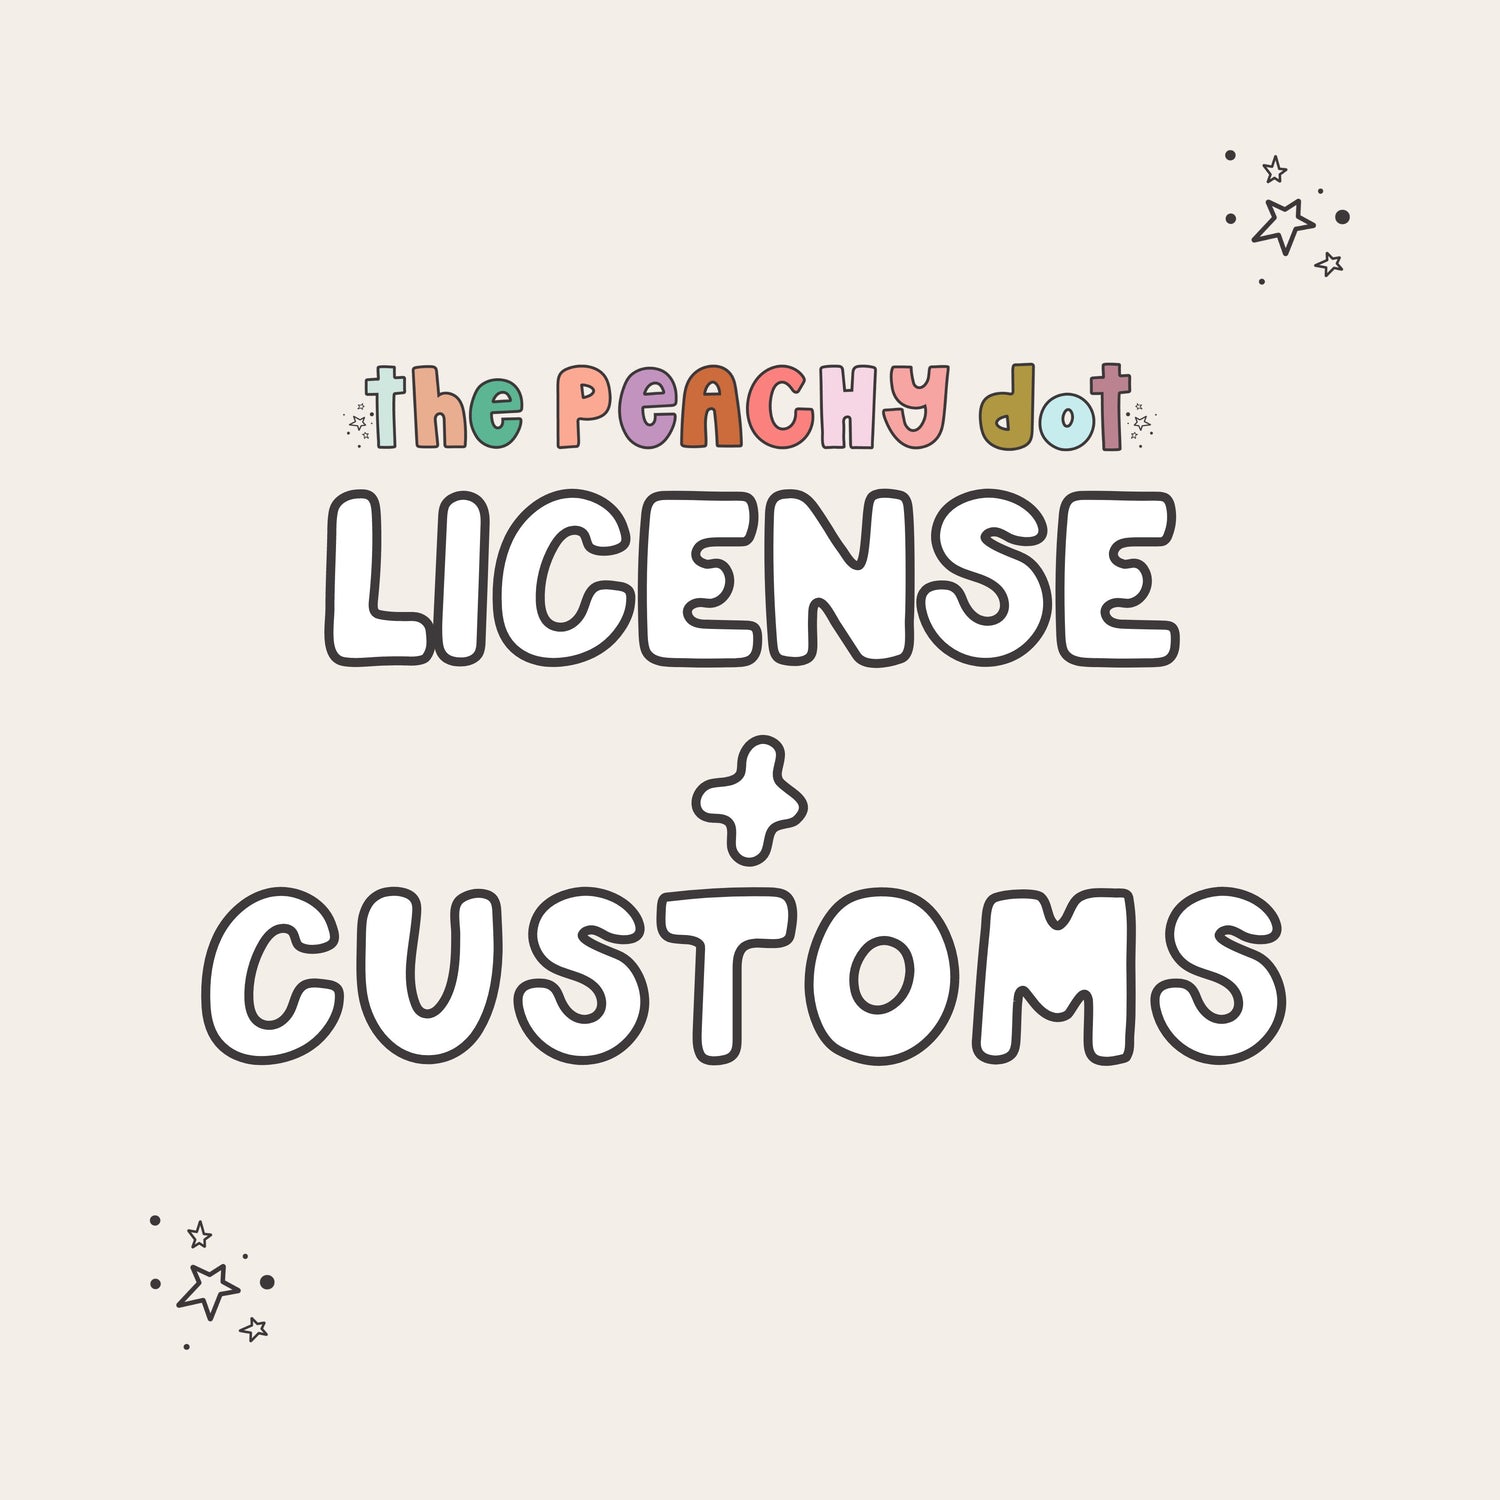 License + Exclusive Customs